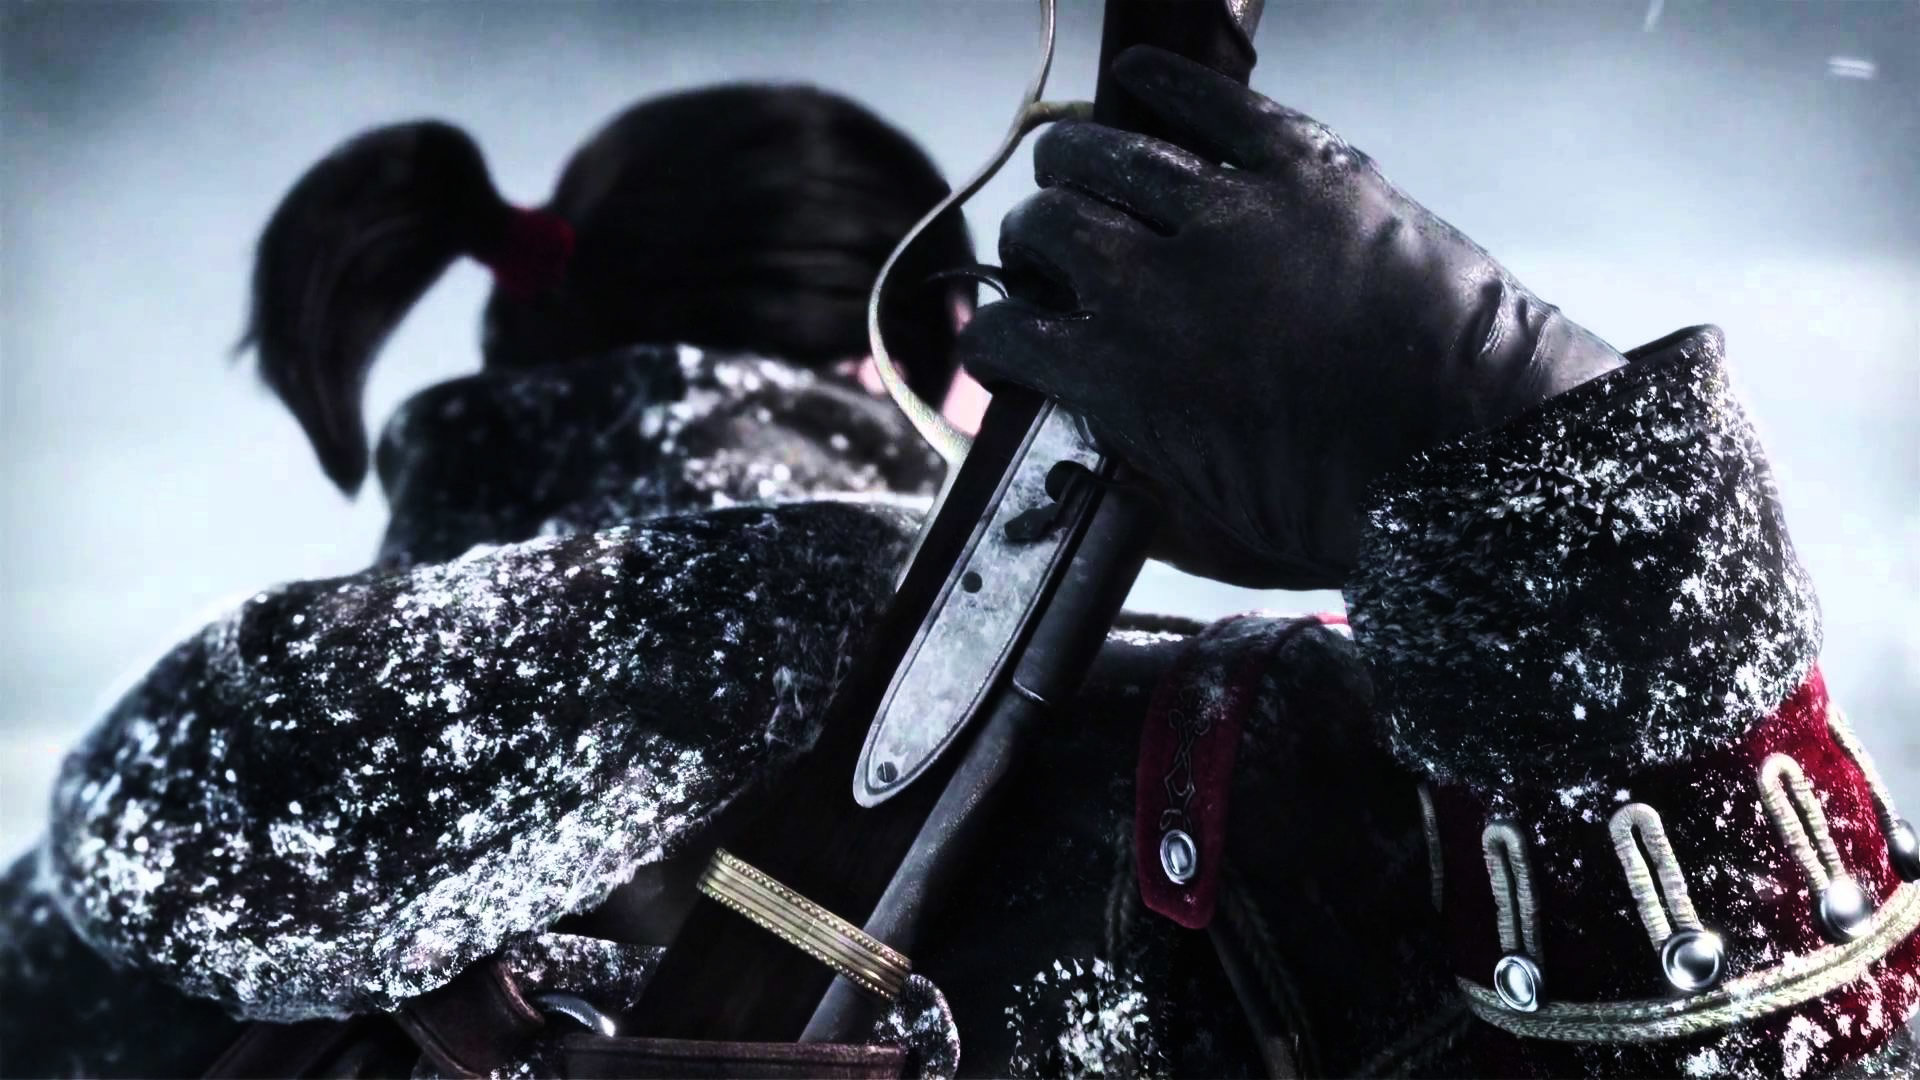 Best Assassin's Creed: Rogue wallpaper ID:231492 for High Resolution hd 1080p desktop